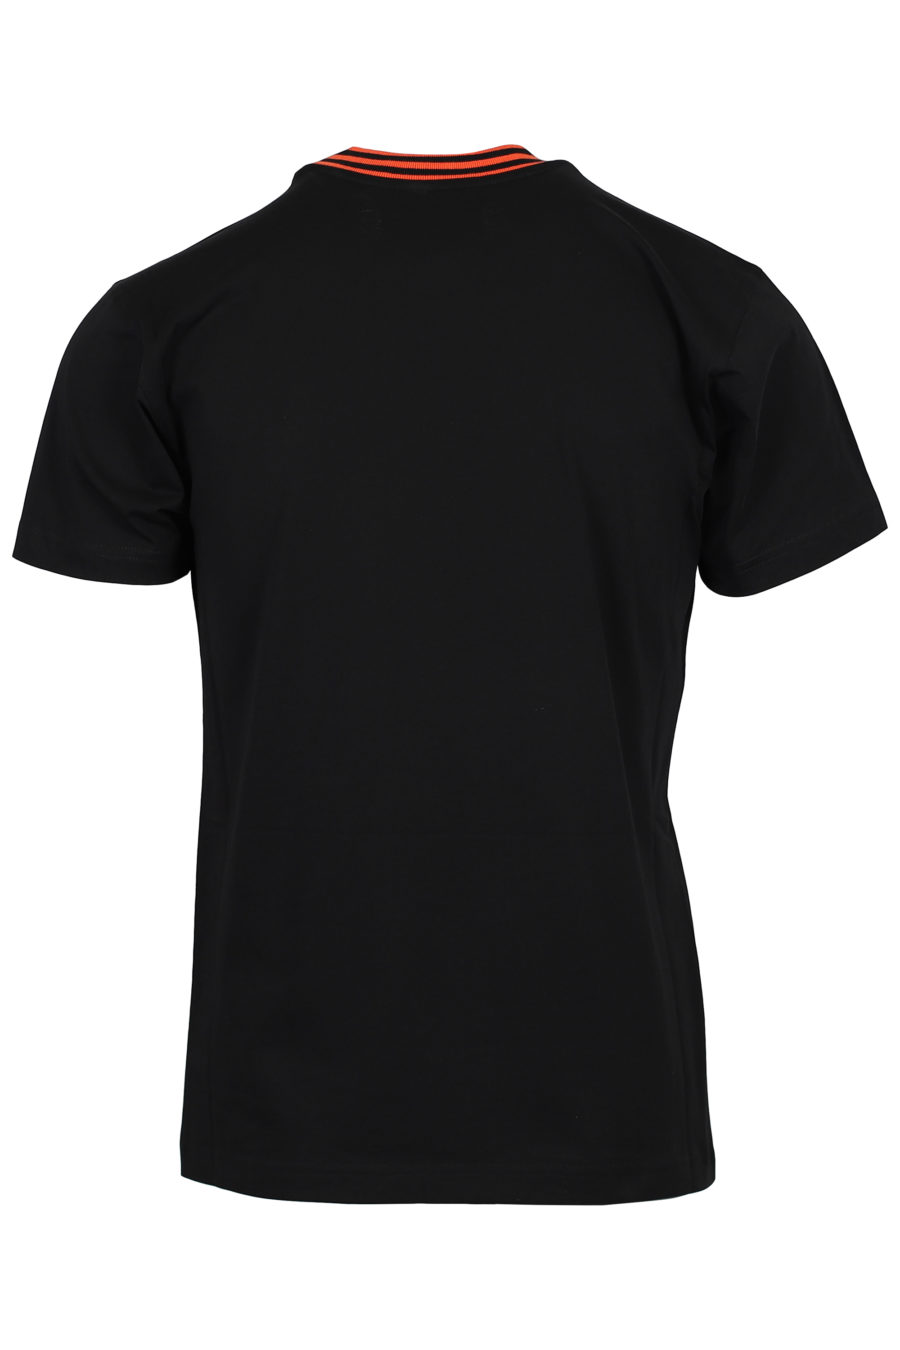 Schwarzes T-Shirt mit Teddybär - IMG 2045